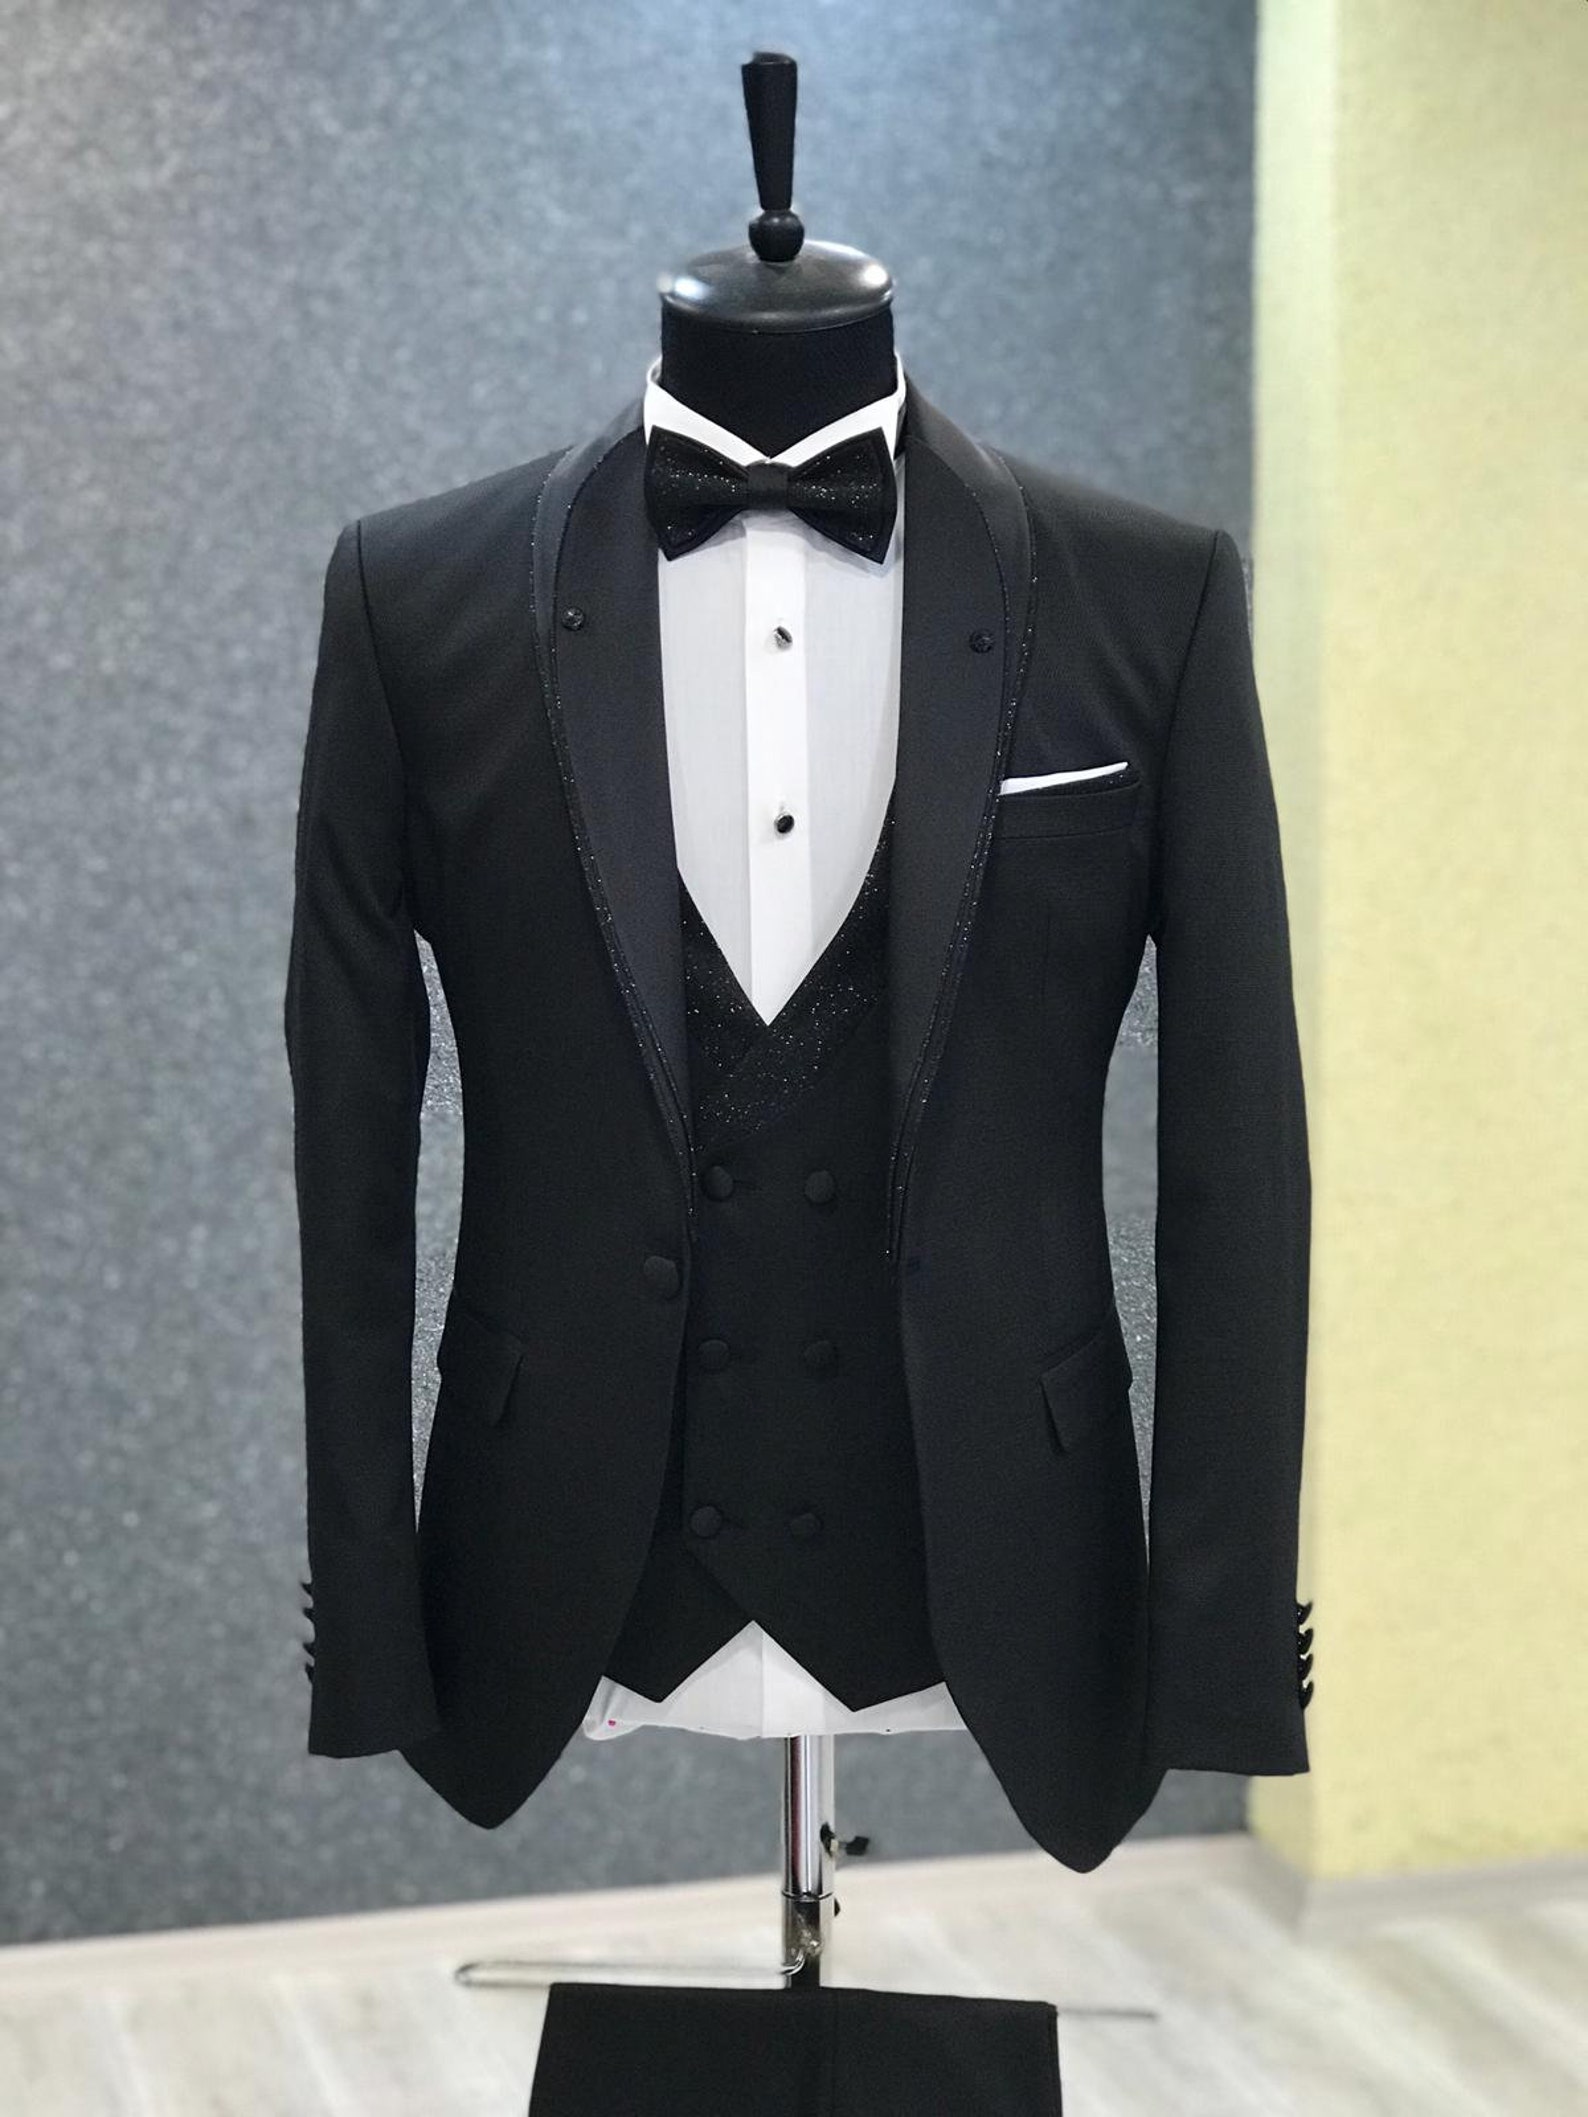 Men Suits Black Wedding Suit Tuxedo Three Piece One Button - Etsy